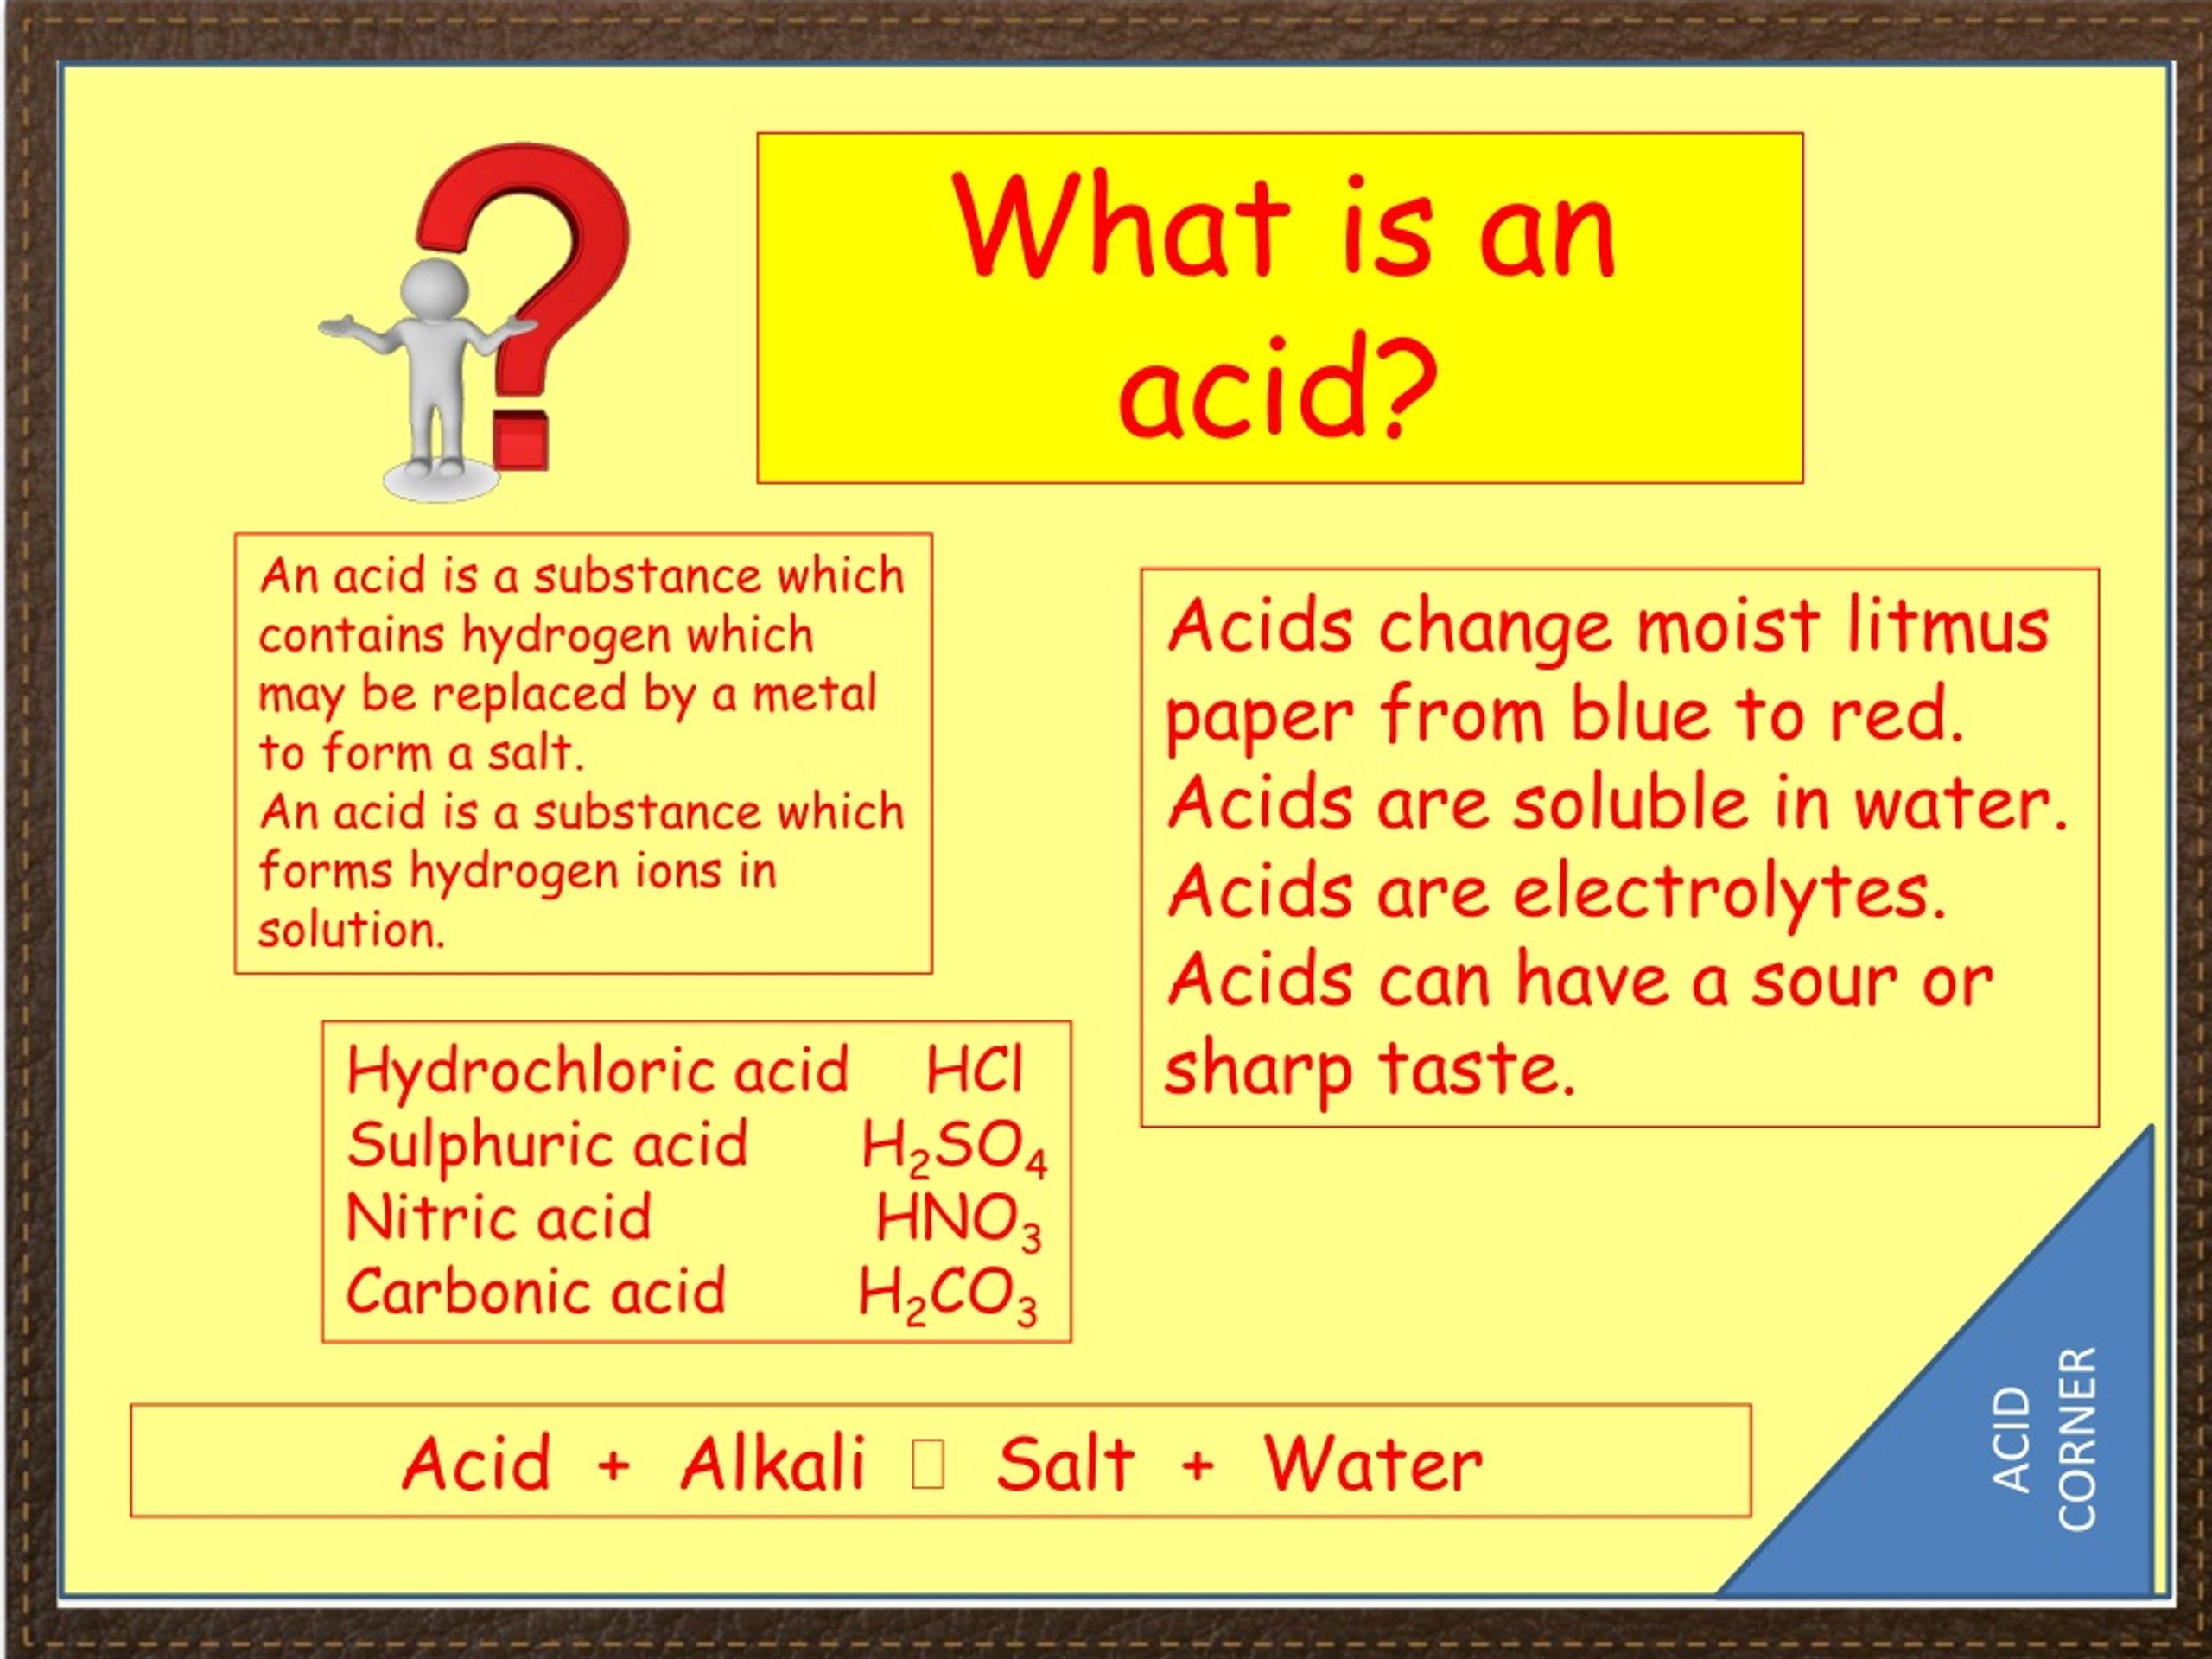 acid definition assignment